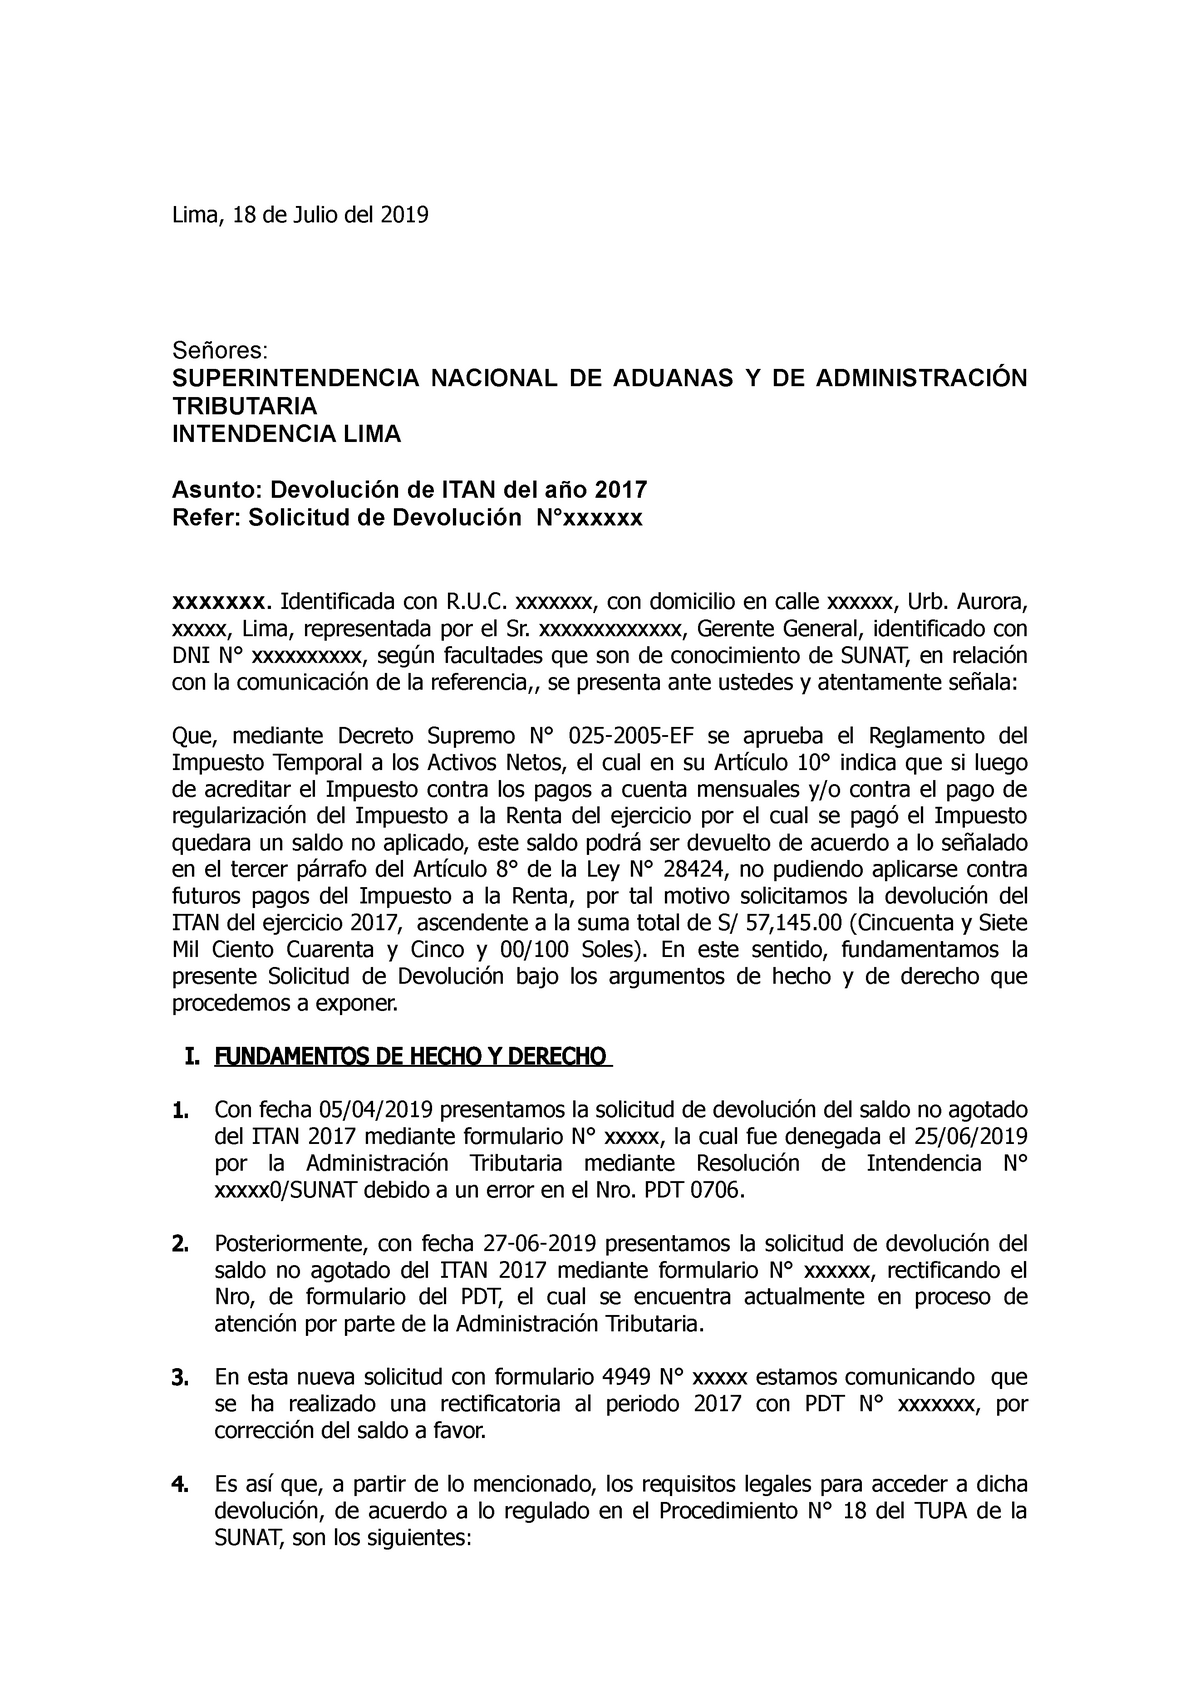 Carta devolucion ITAN-2017-reiterativa 18-07-2019 - Tributacion Municipal y  Regional - Studocu